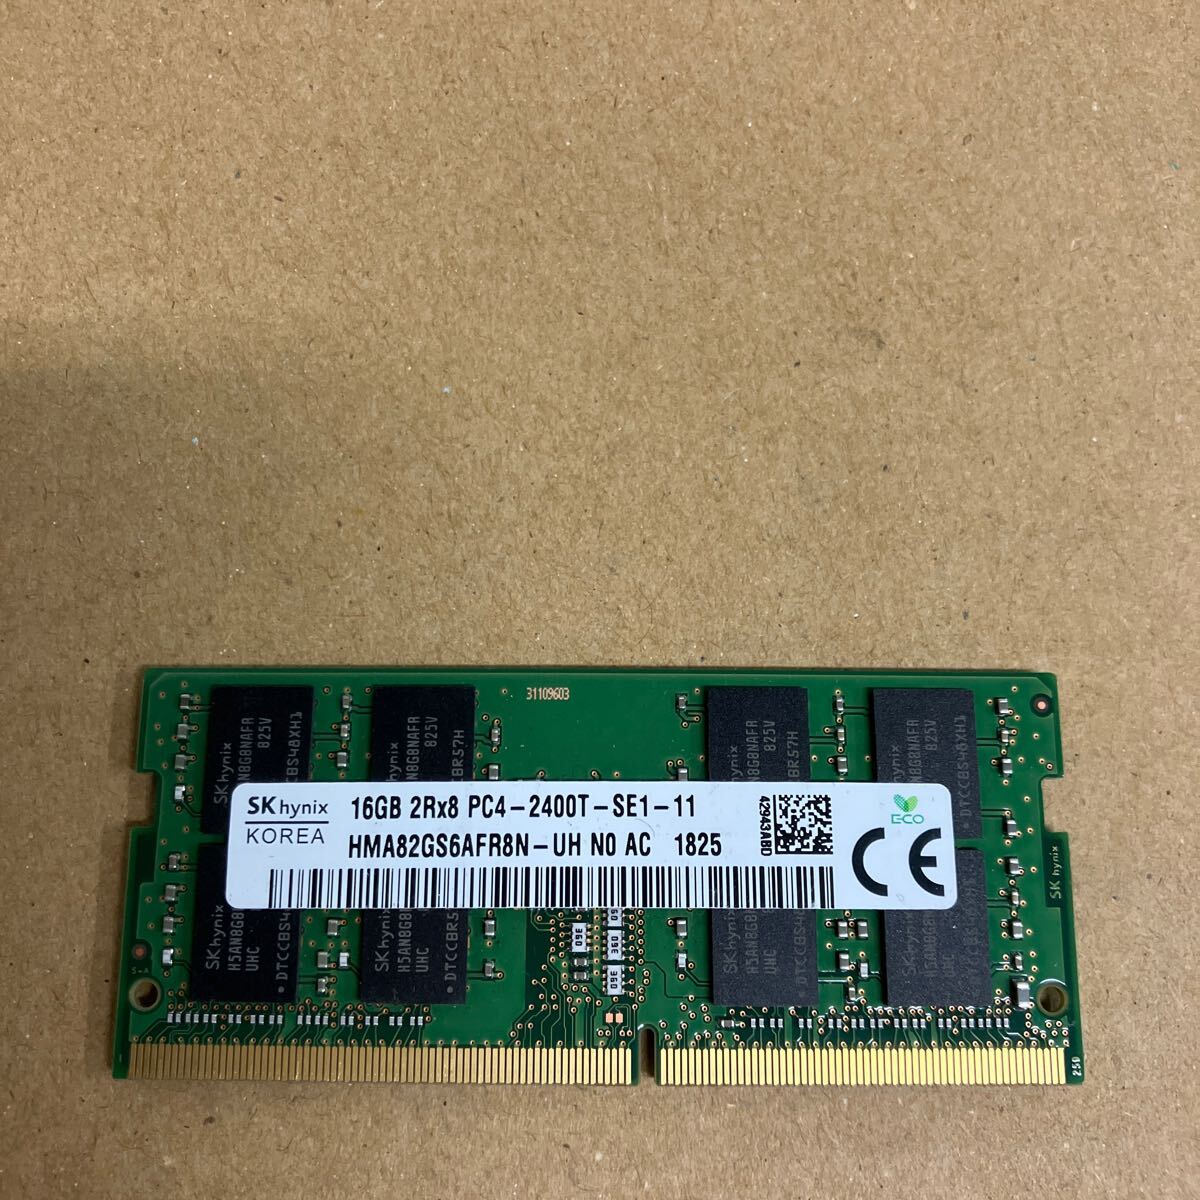 L184 SKhynix Note PC memory 16GB 2Rx8 PC4-2400T 1 sheets operation verification goods 